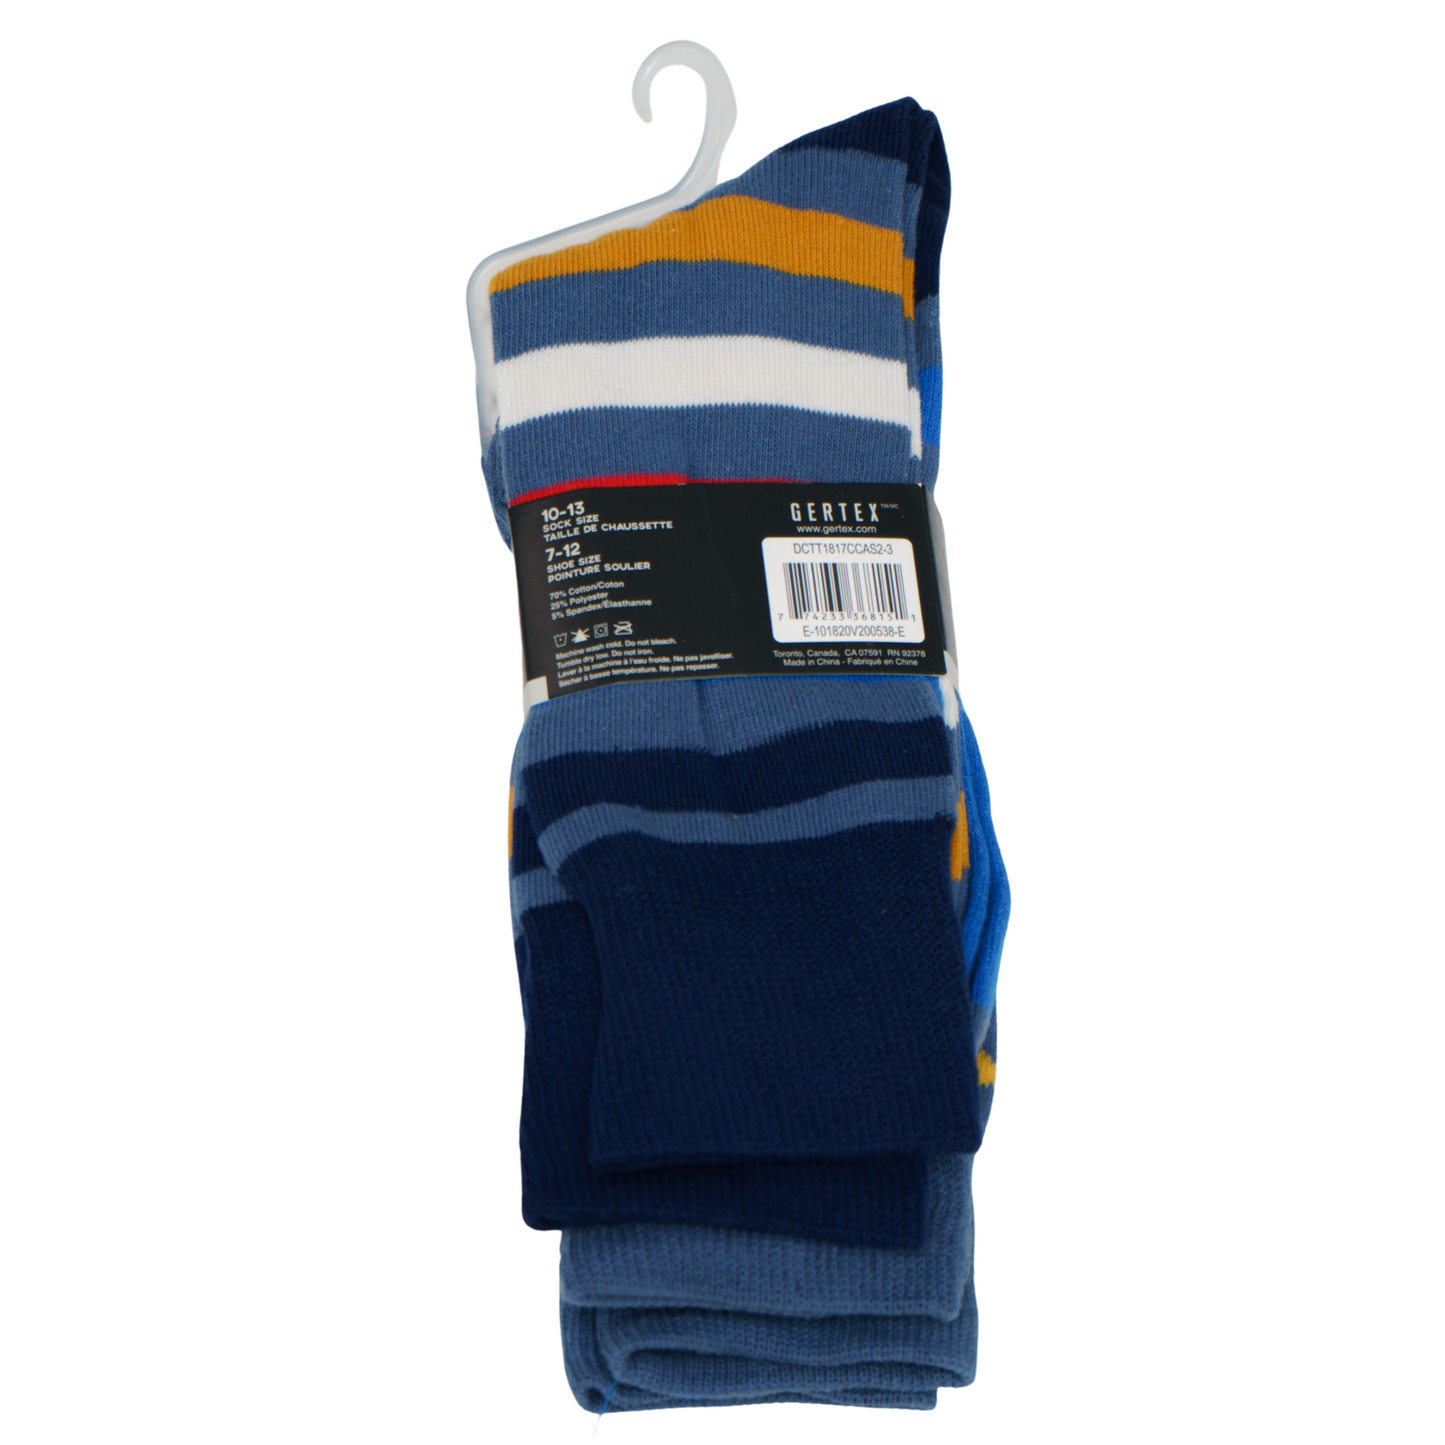 D&CO Dress Socks - Cotton Blend - 3 PK